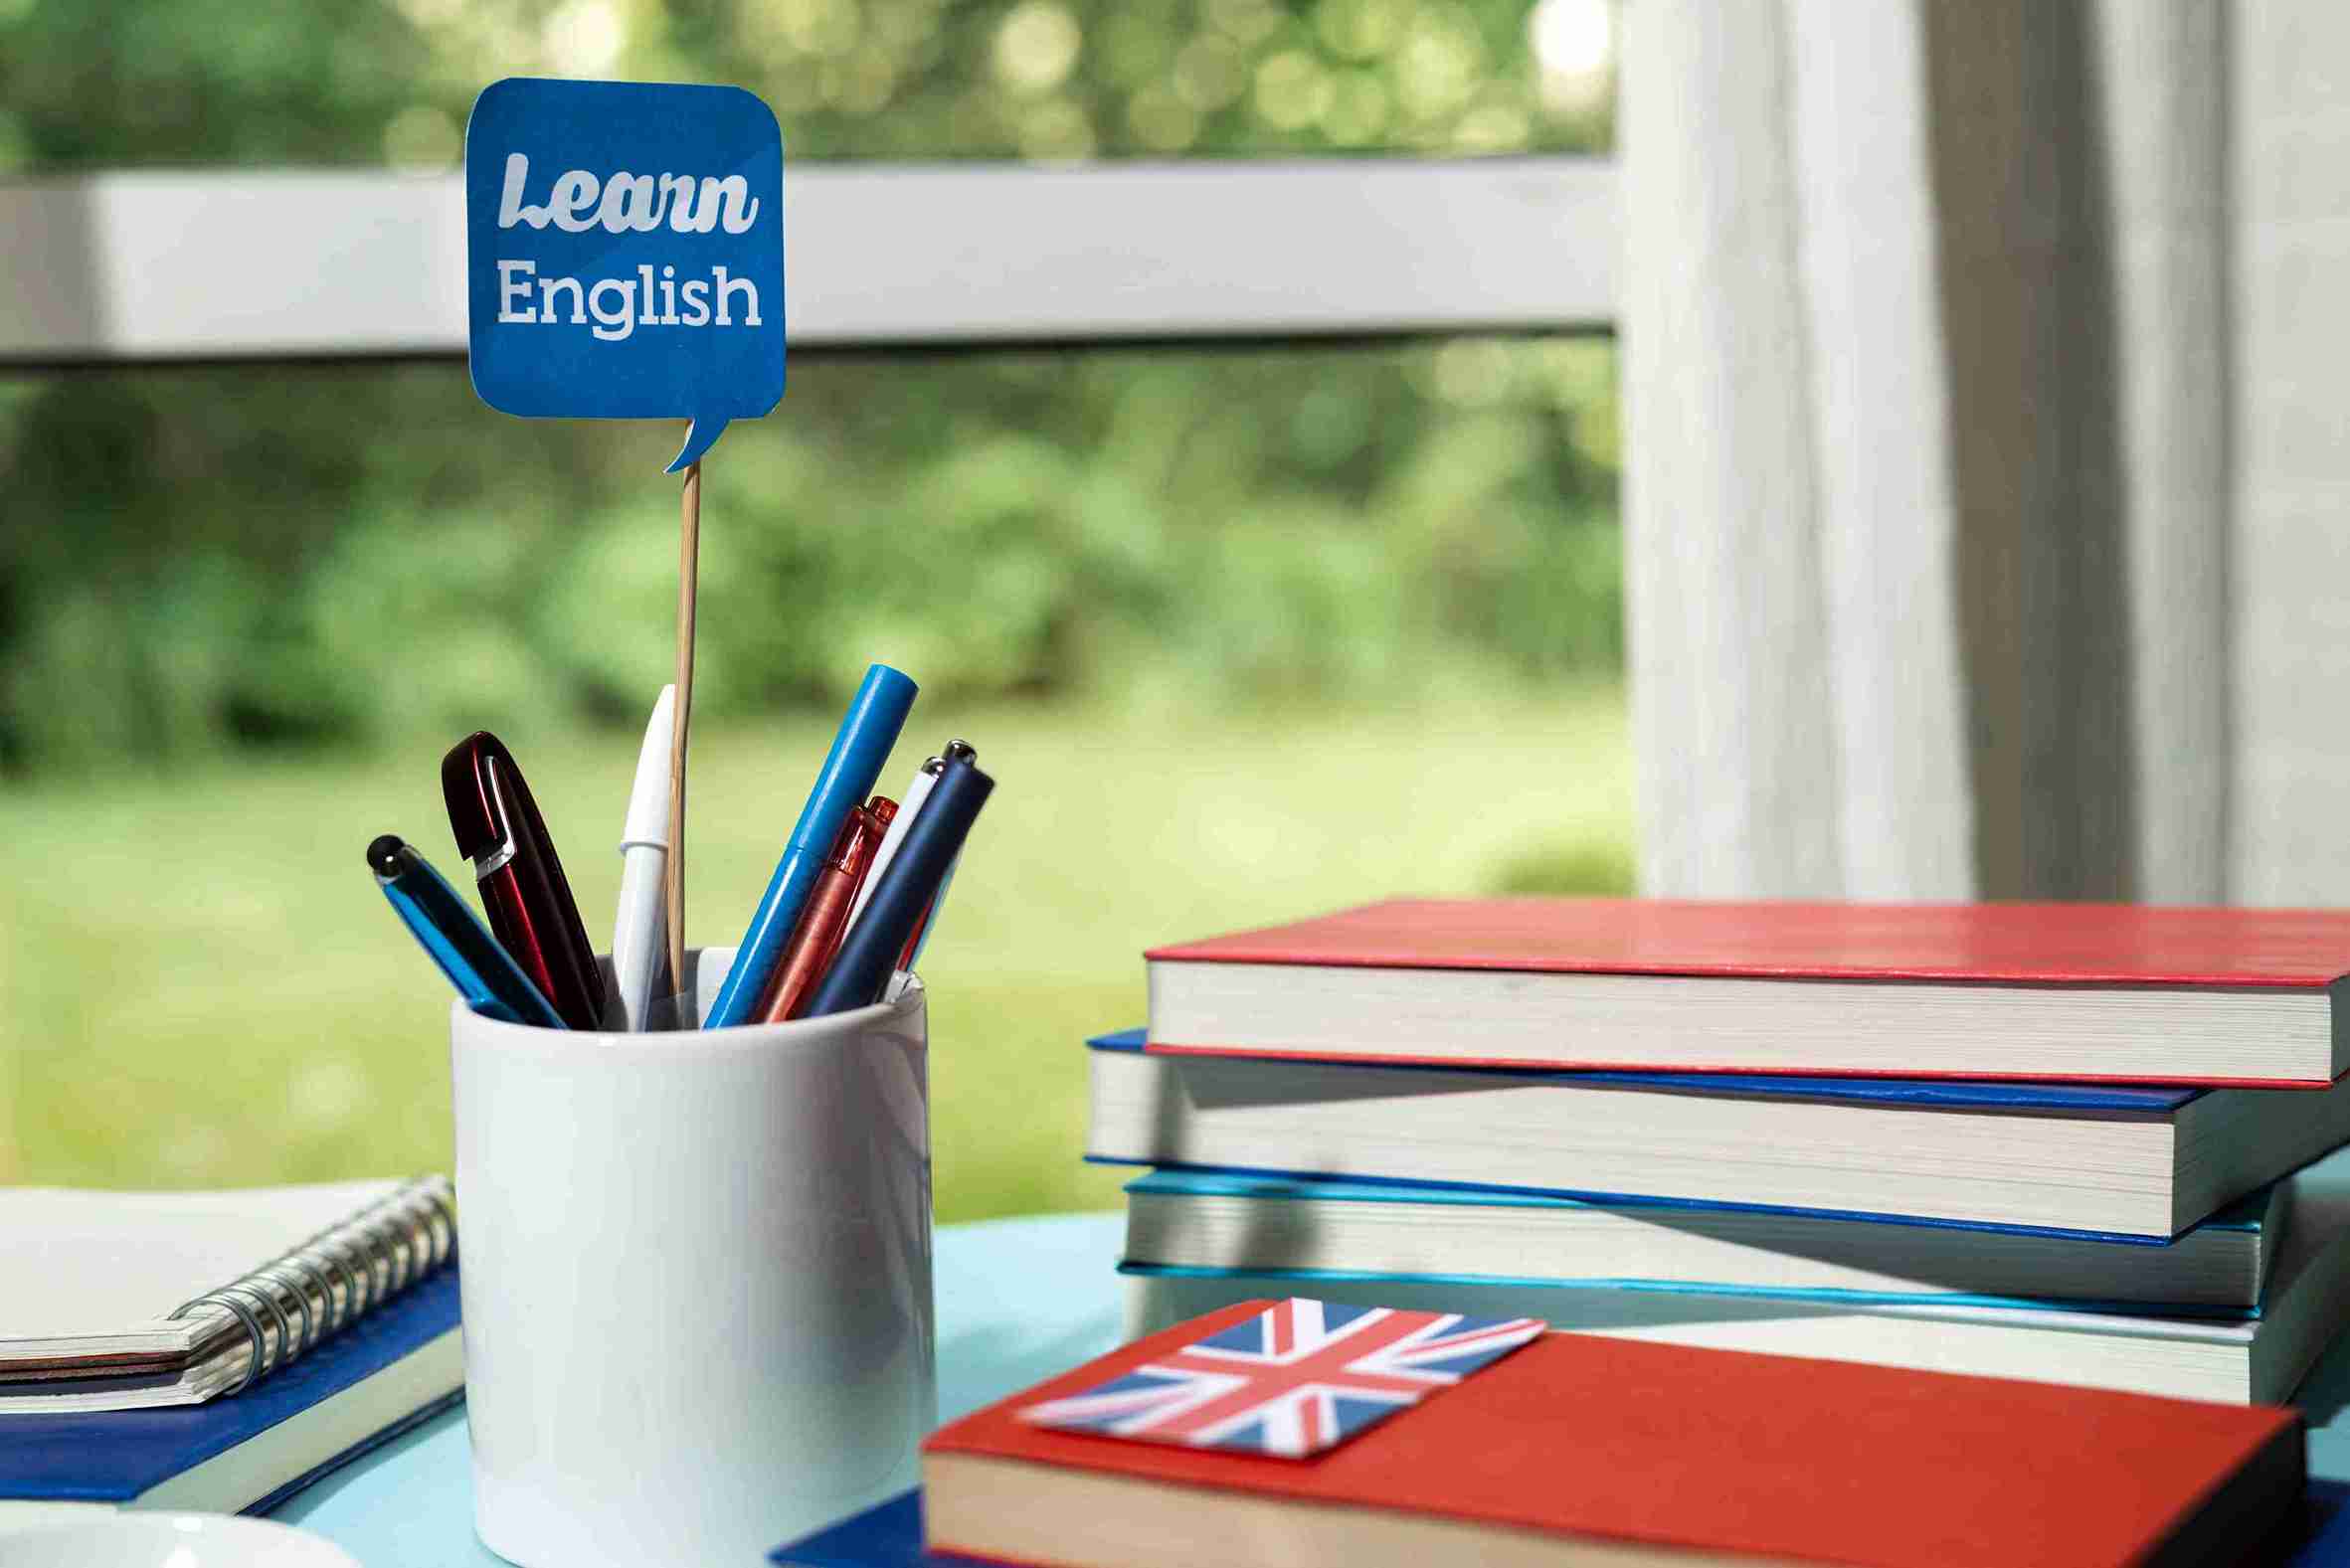 20 Kosa kata dan Contoh Percakapan Bahasa Inggris di Kasir